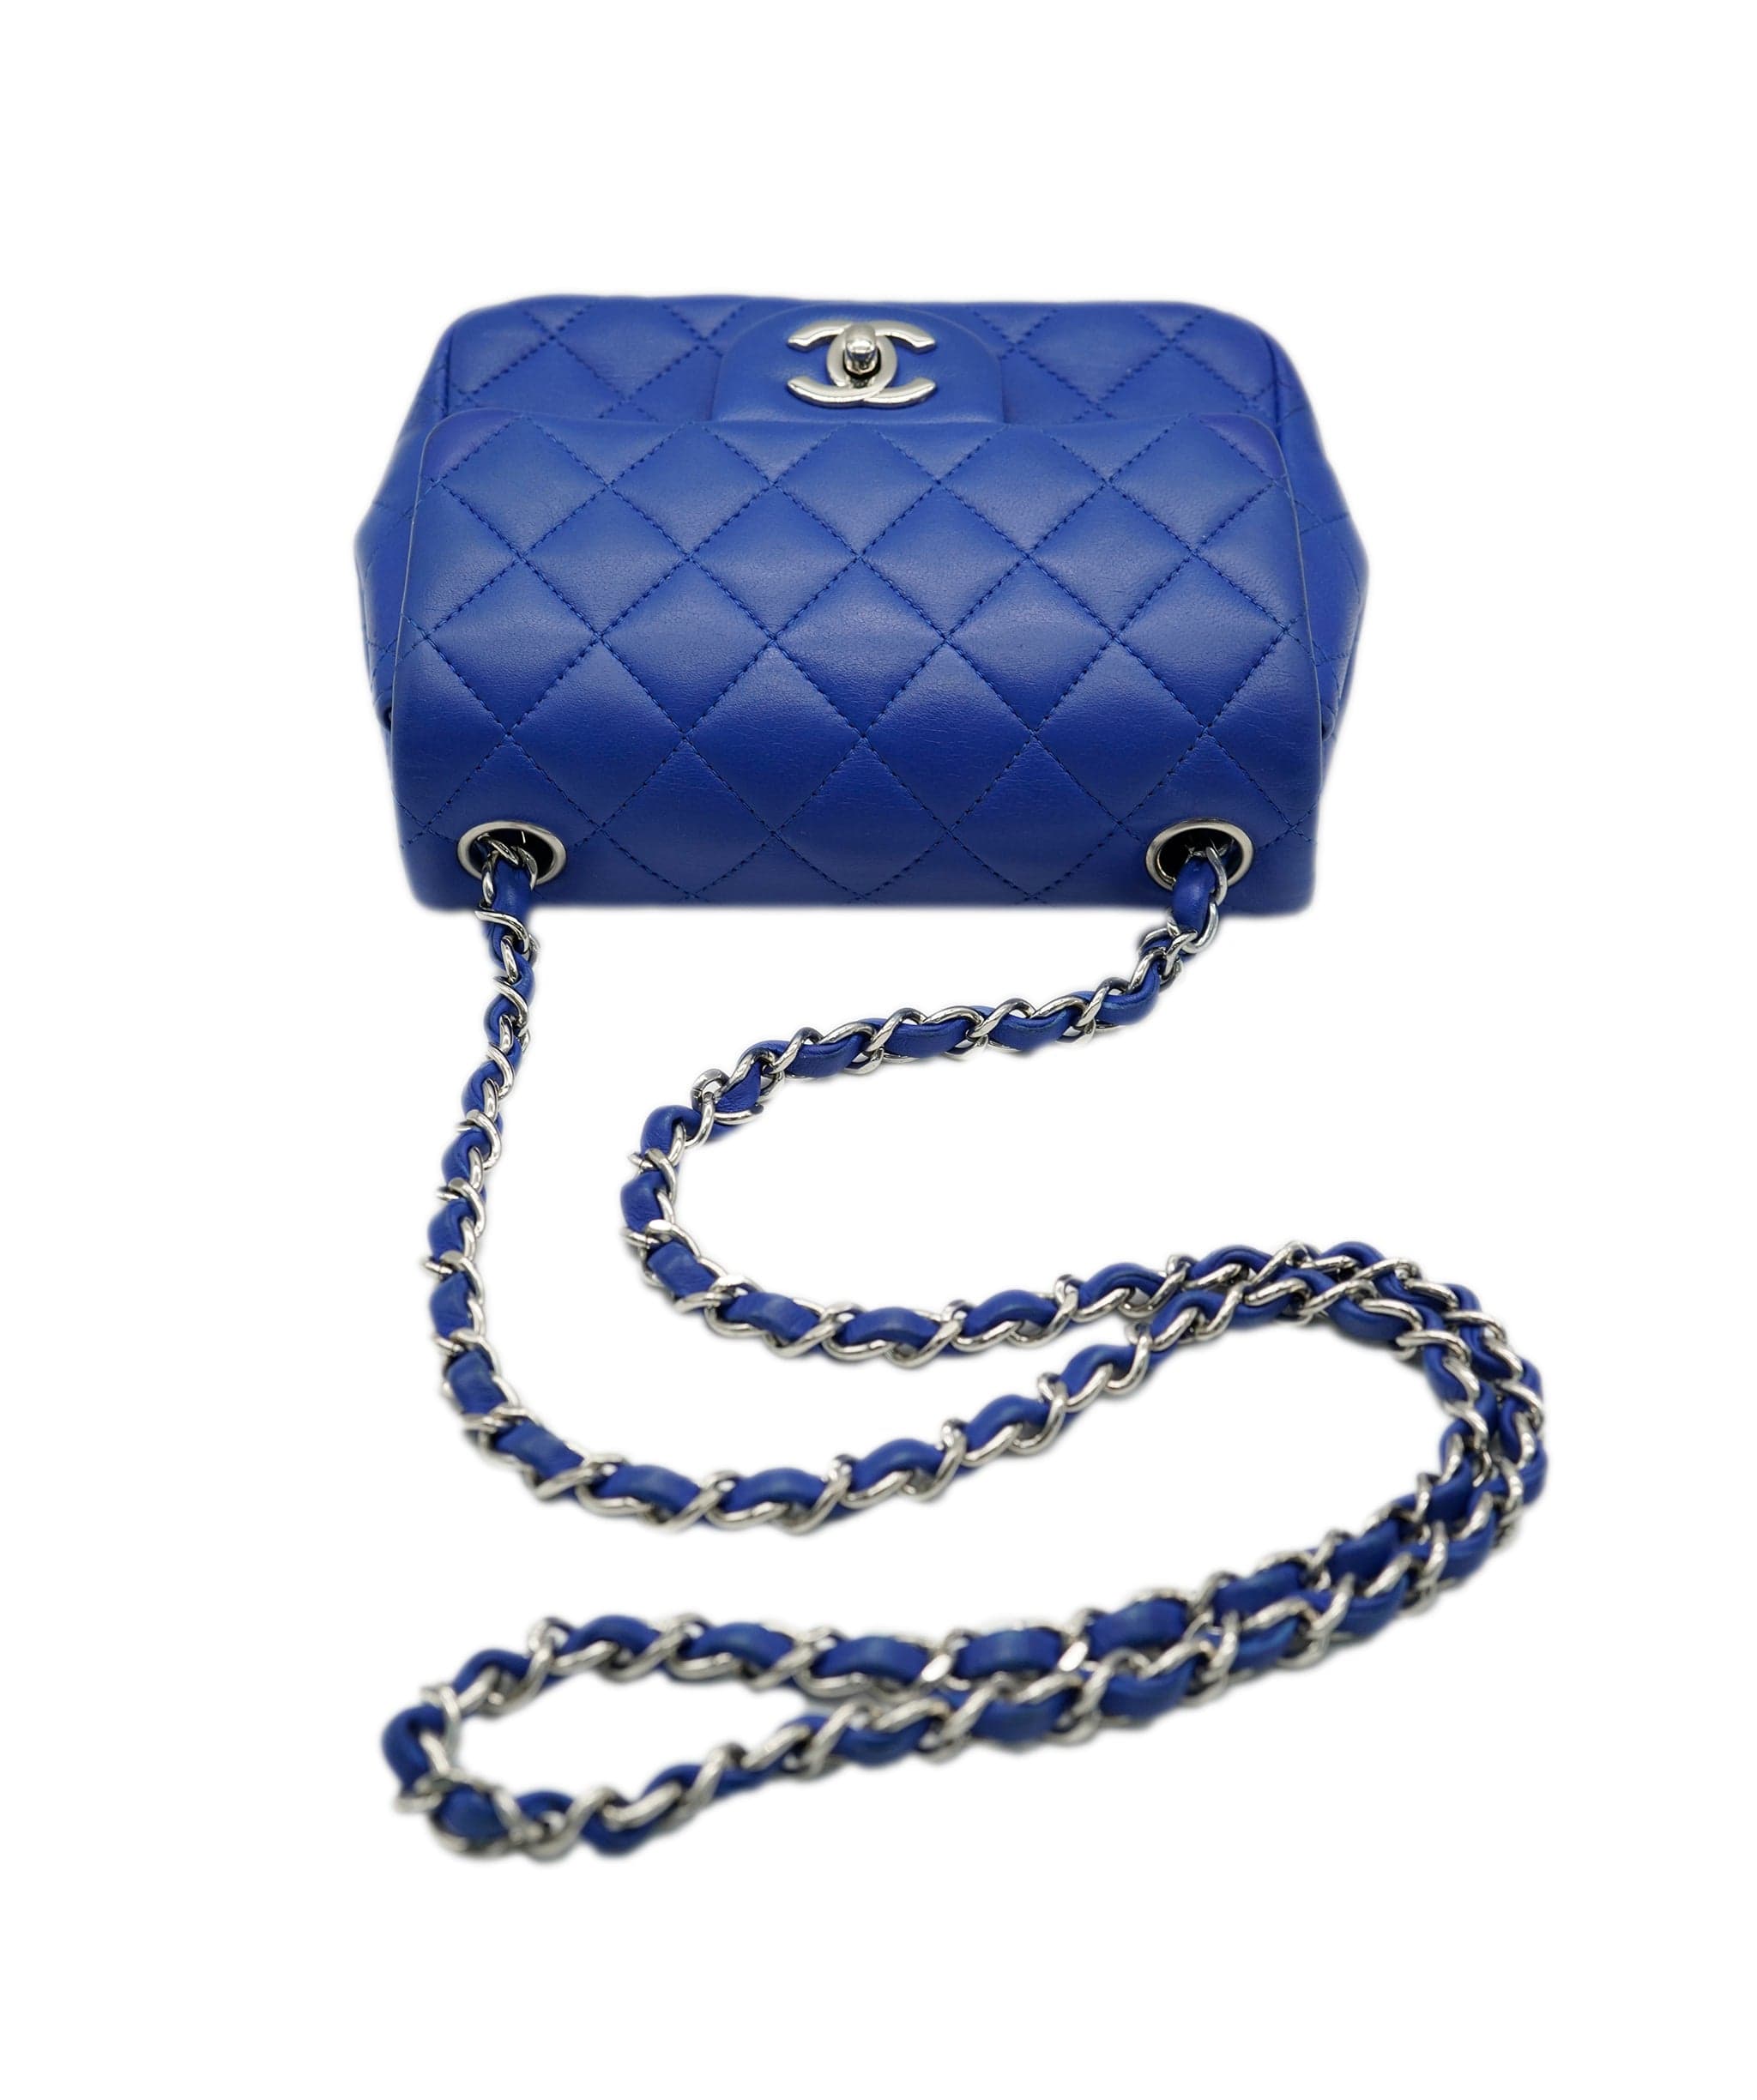 Chanel Chanel mini square timeless bag blue electric lambskin shw AVC1300